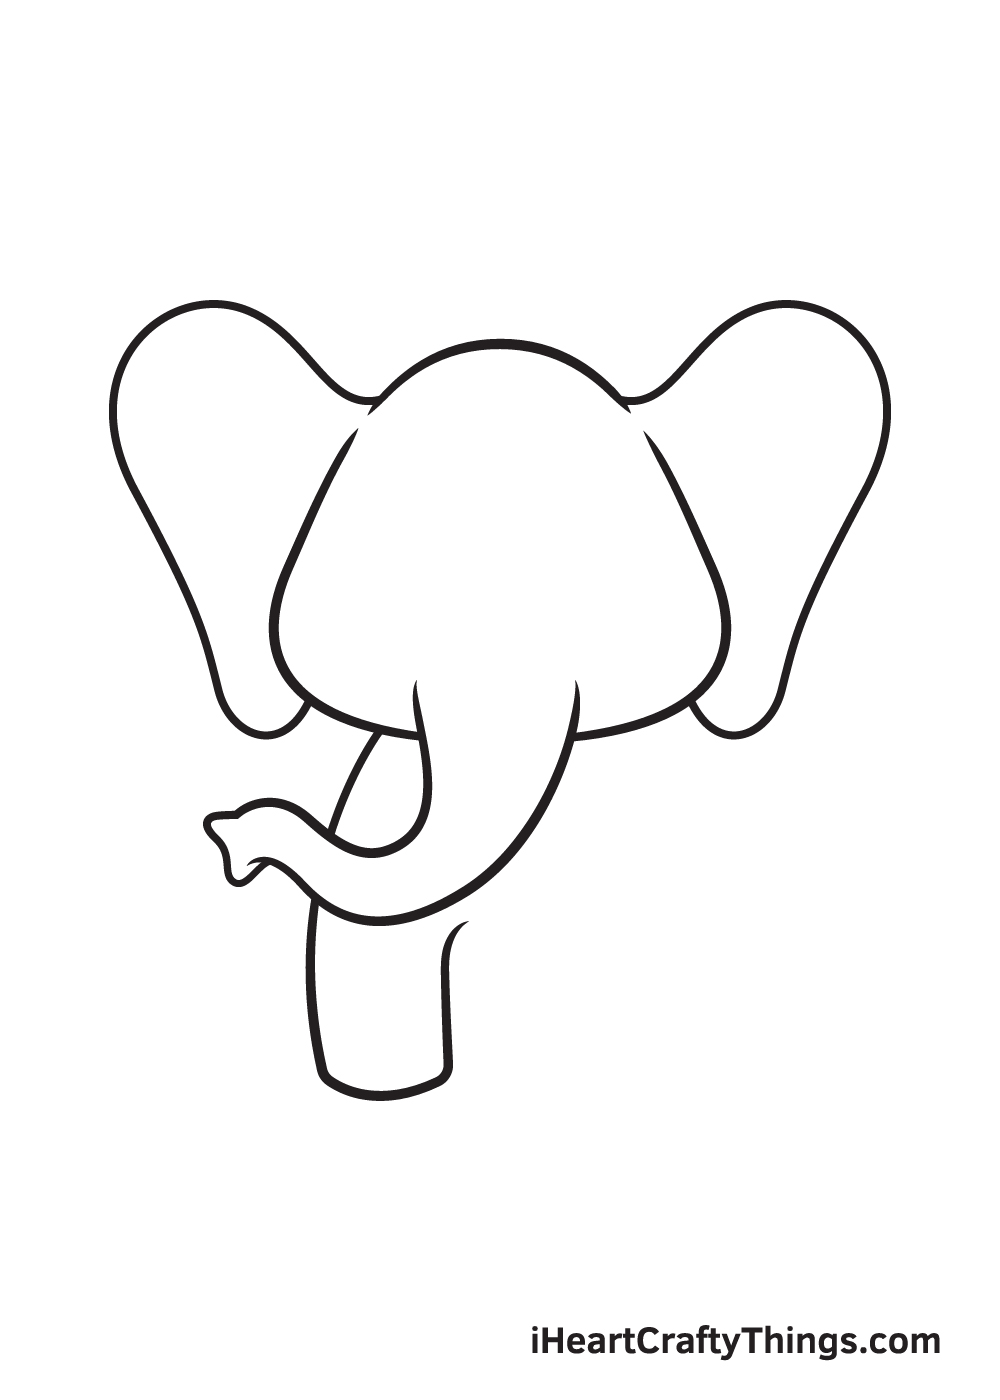 Vẽ con voi - Bước 4